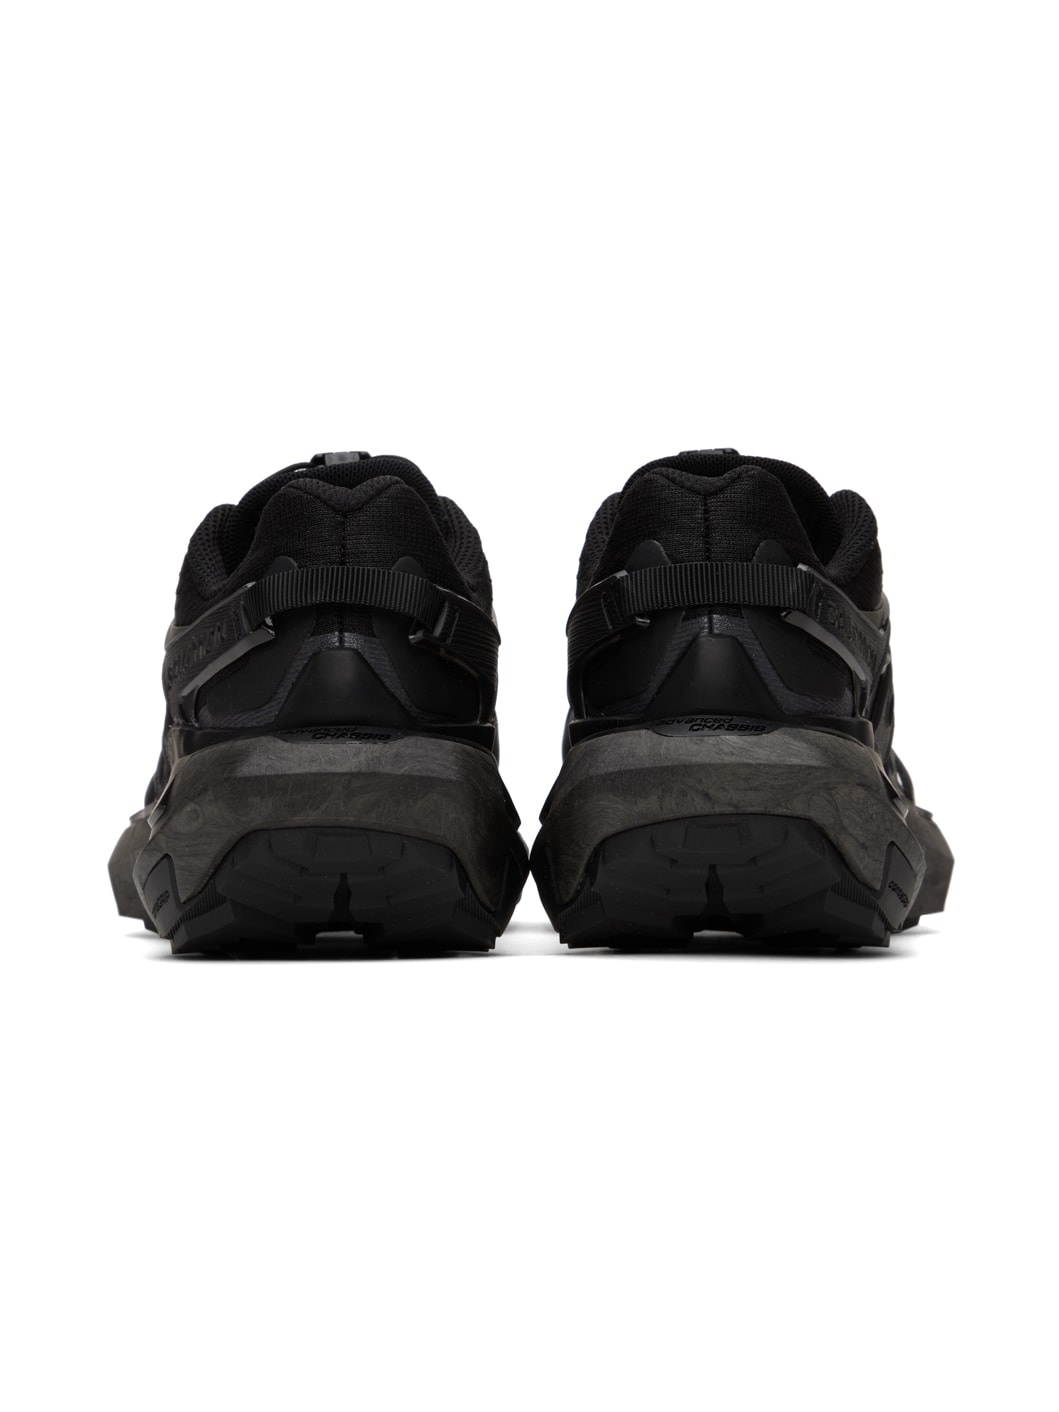 Black XT PU.RE Advanced Sneakers - 2